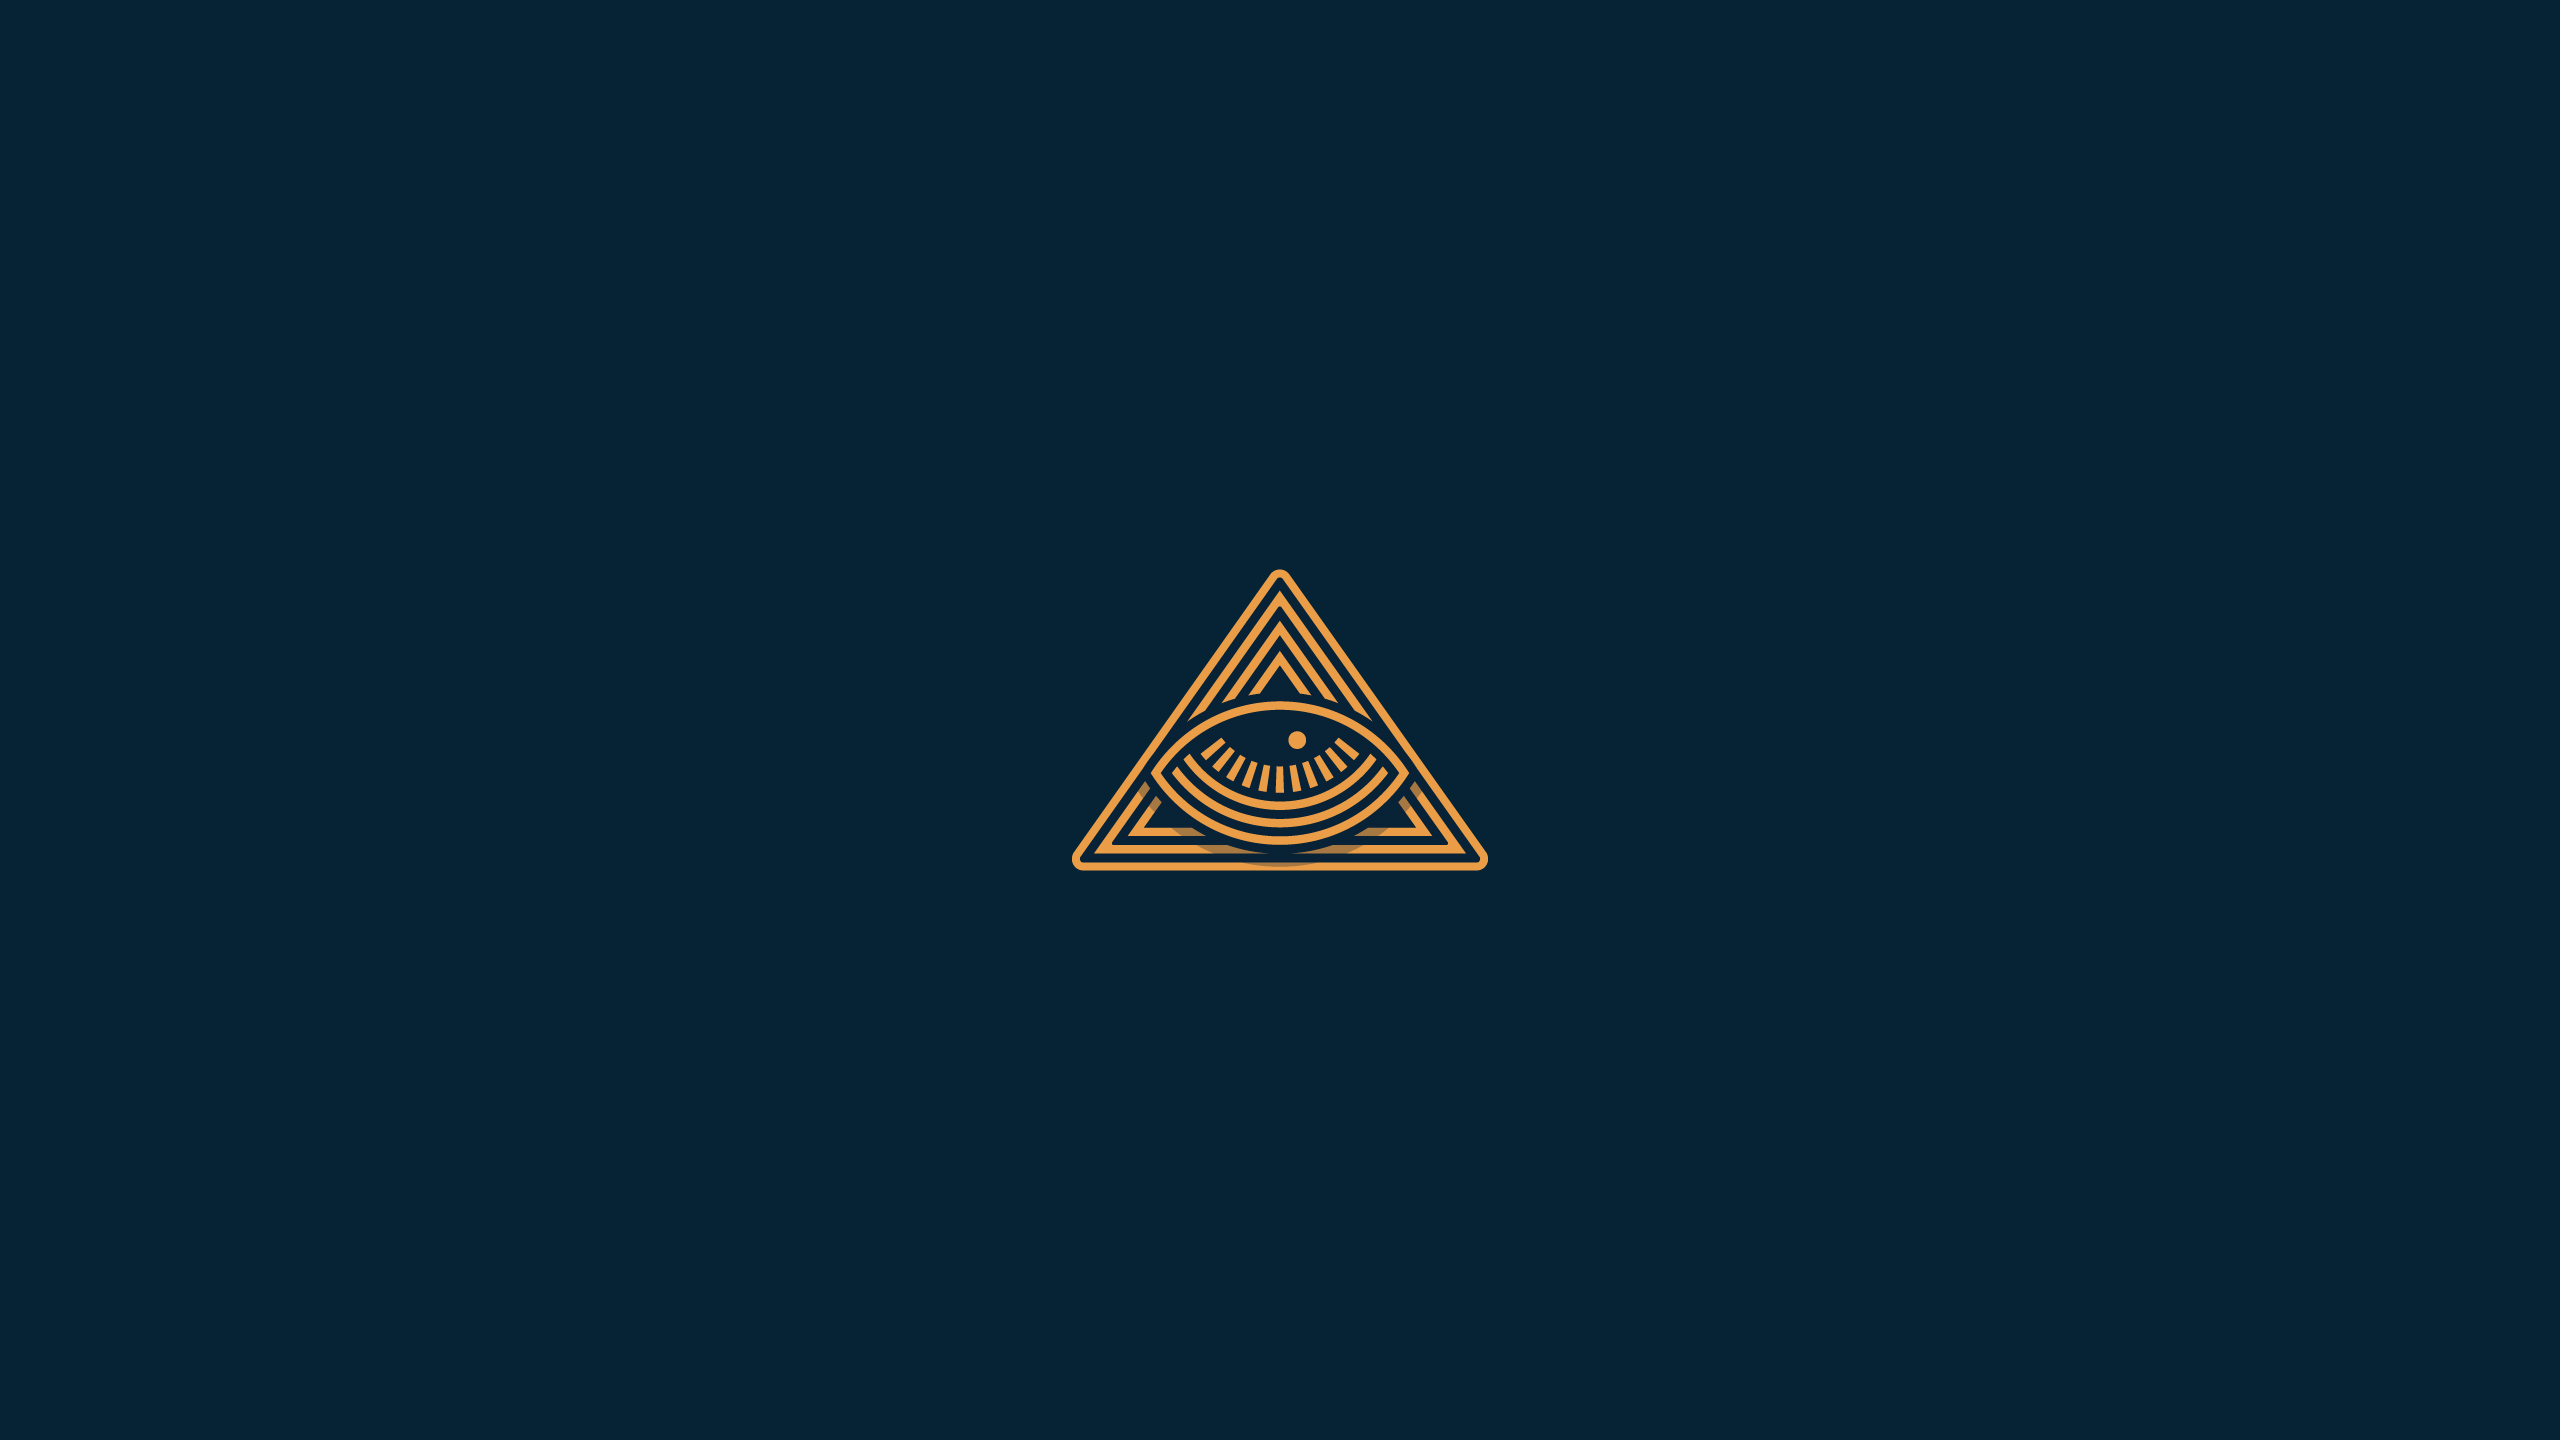 graphic design, Blue background, Illuminati, Pyramid, The all seeing